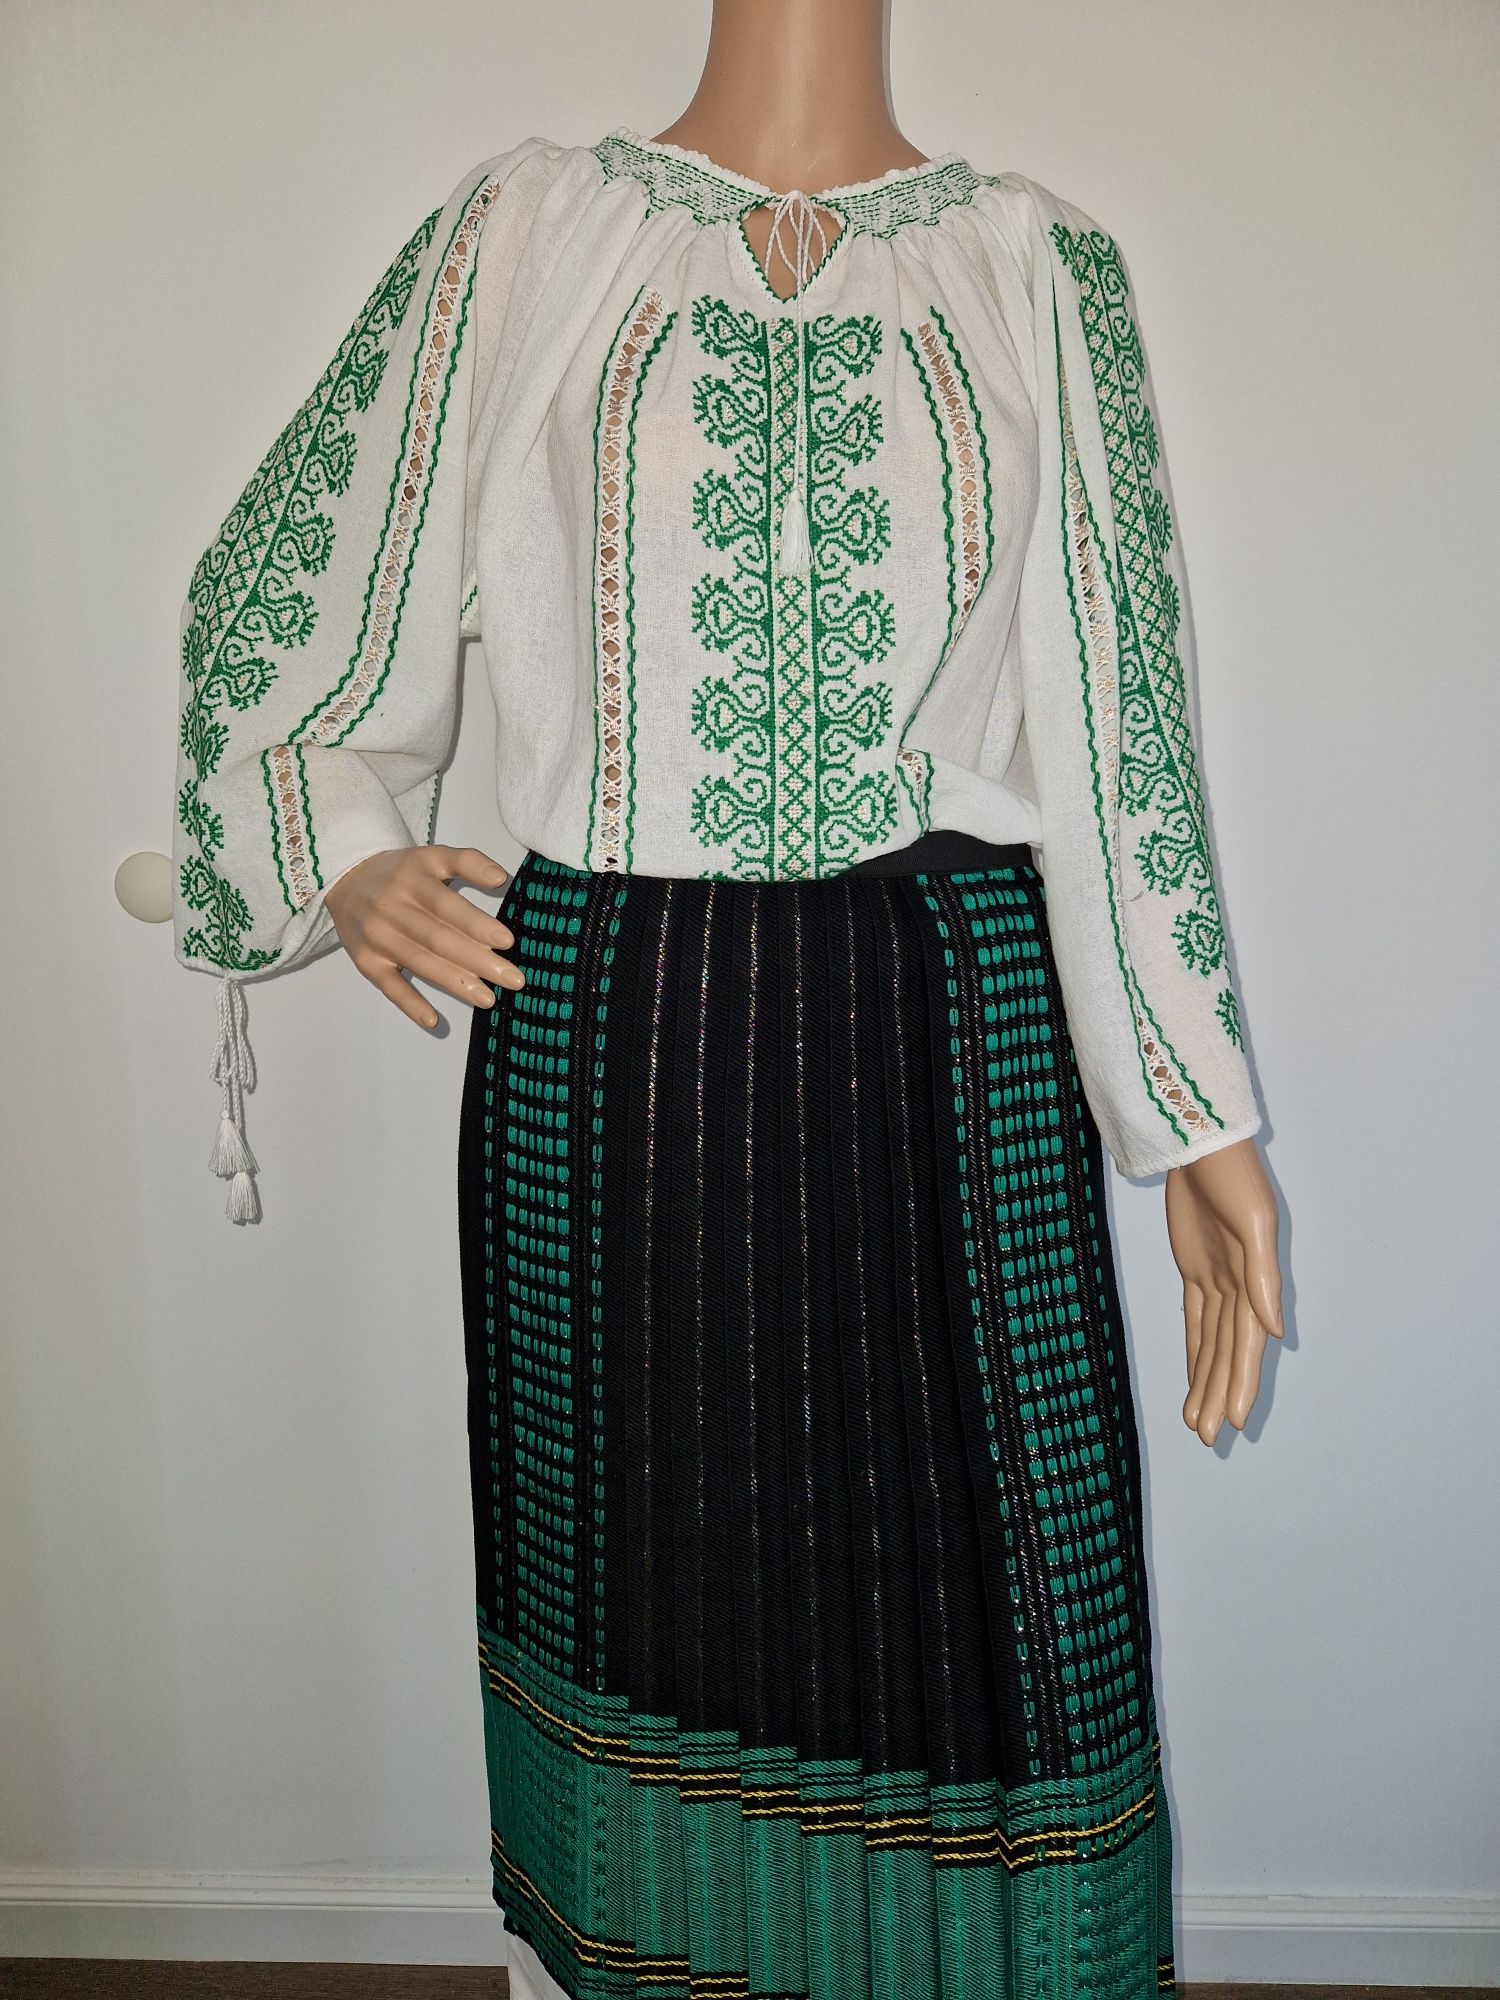 Costum popular traditional cusut manual